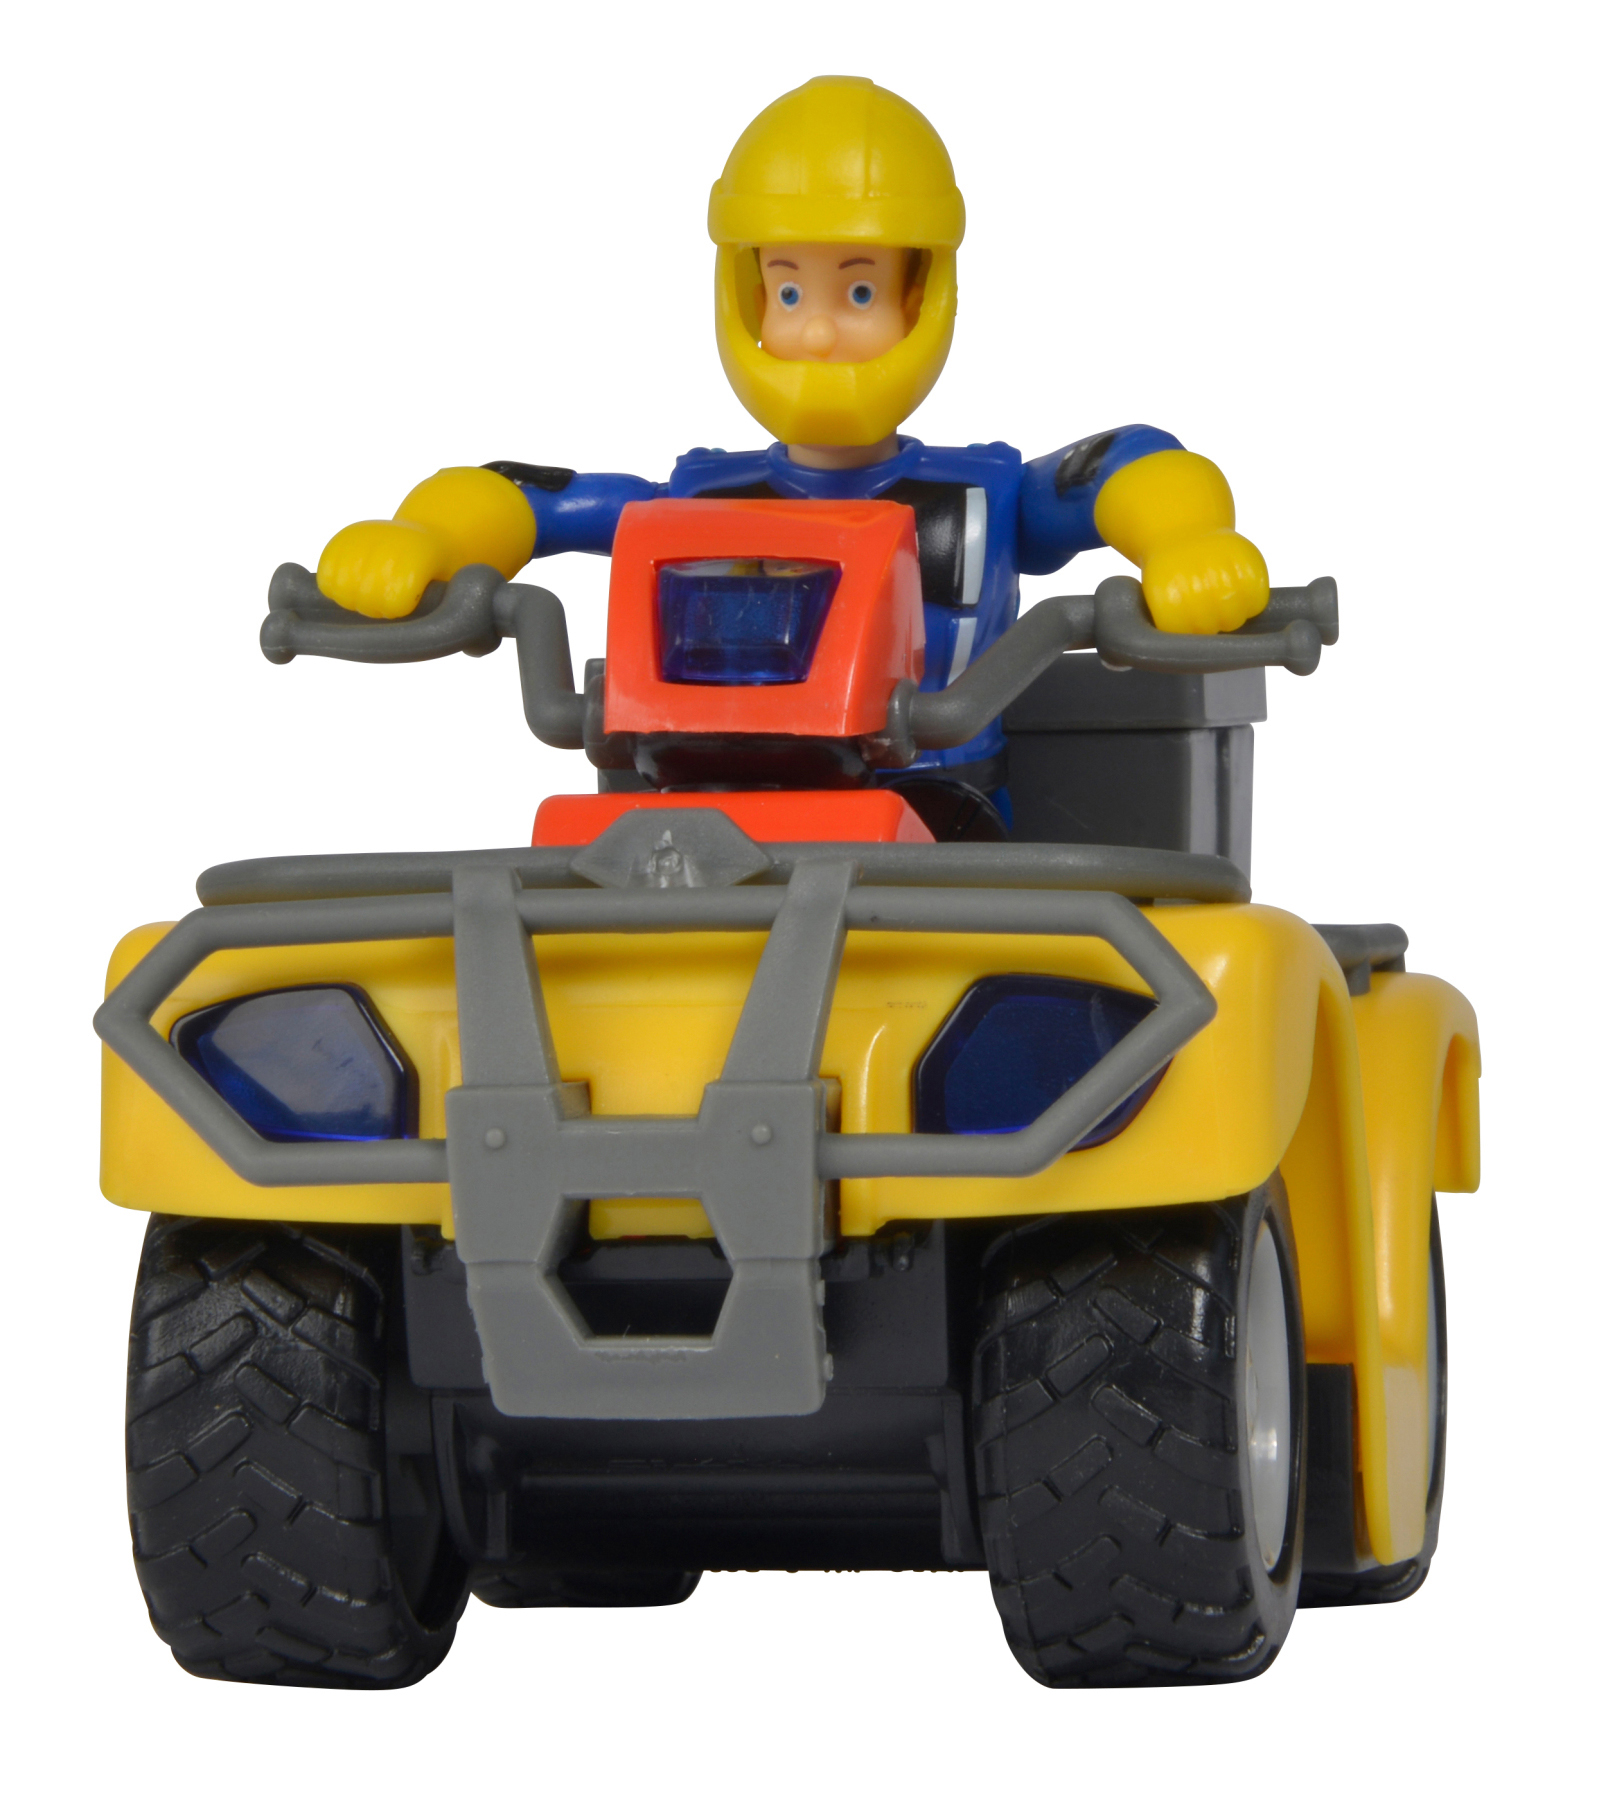 SIMBA TOYS Sam Mehrfarbig Mercury-Quad mit Spielzeugquad Figur